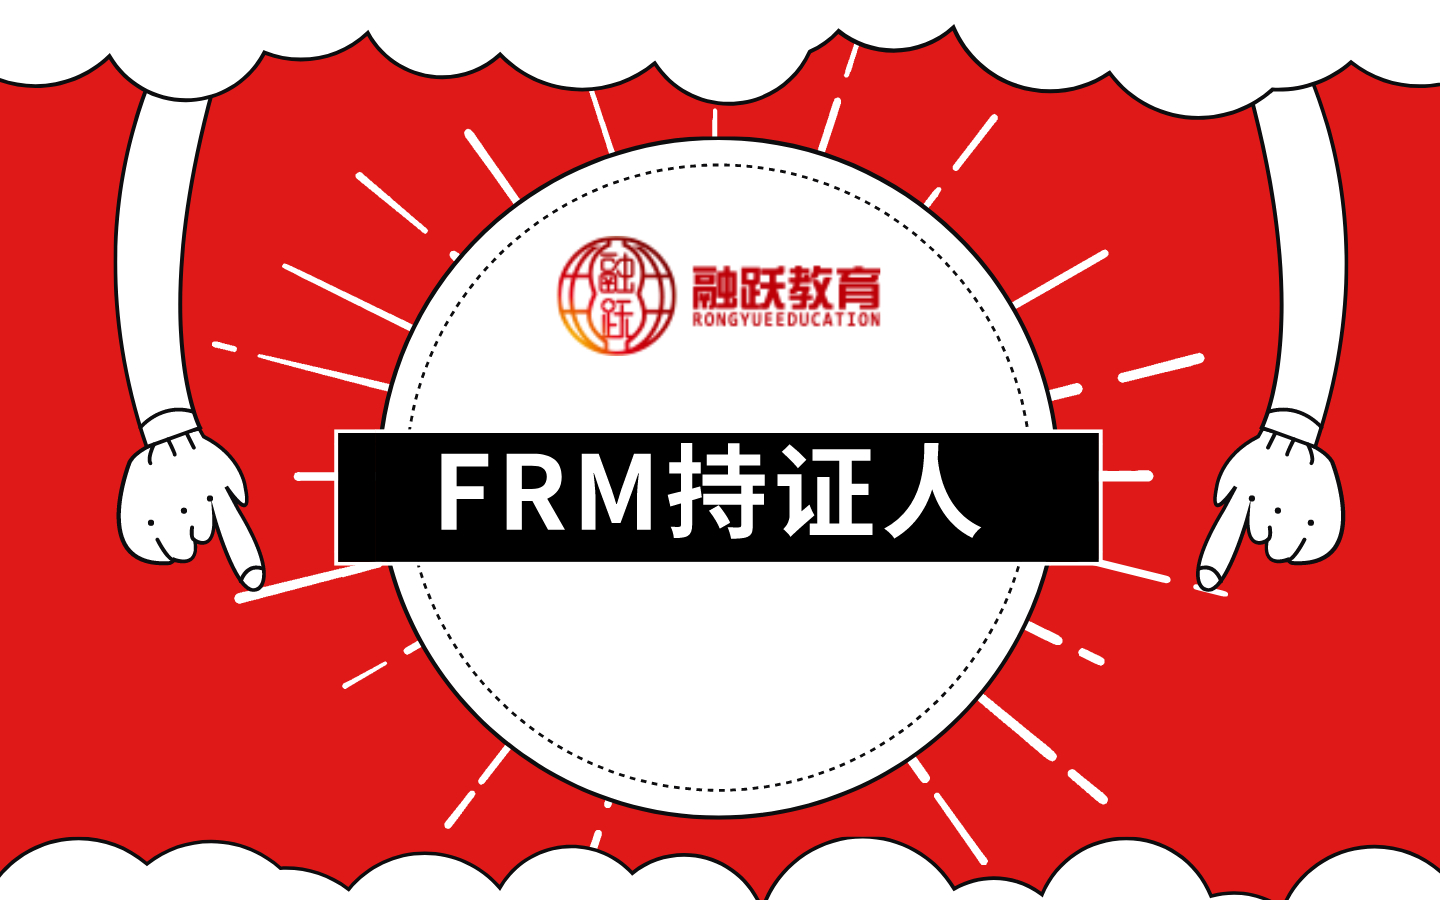 FRM持证人在中国的就业形势如何？就业形势好吗？